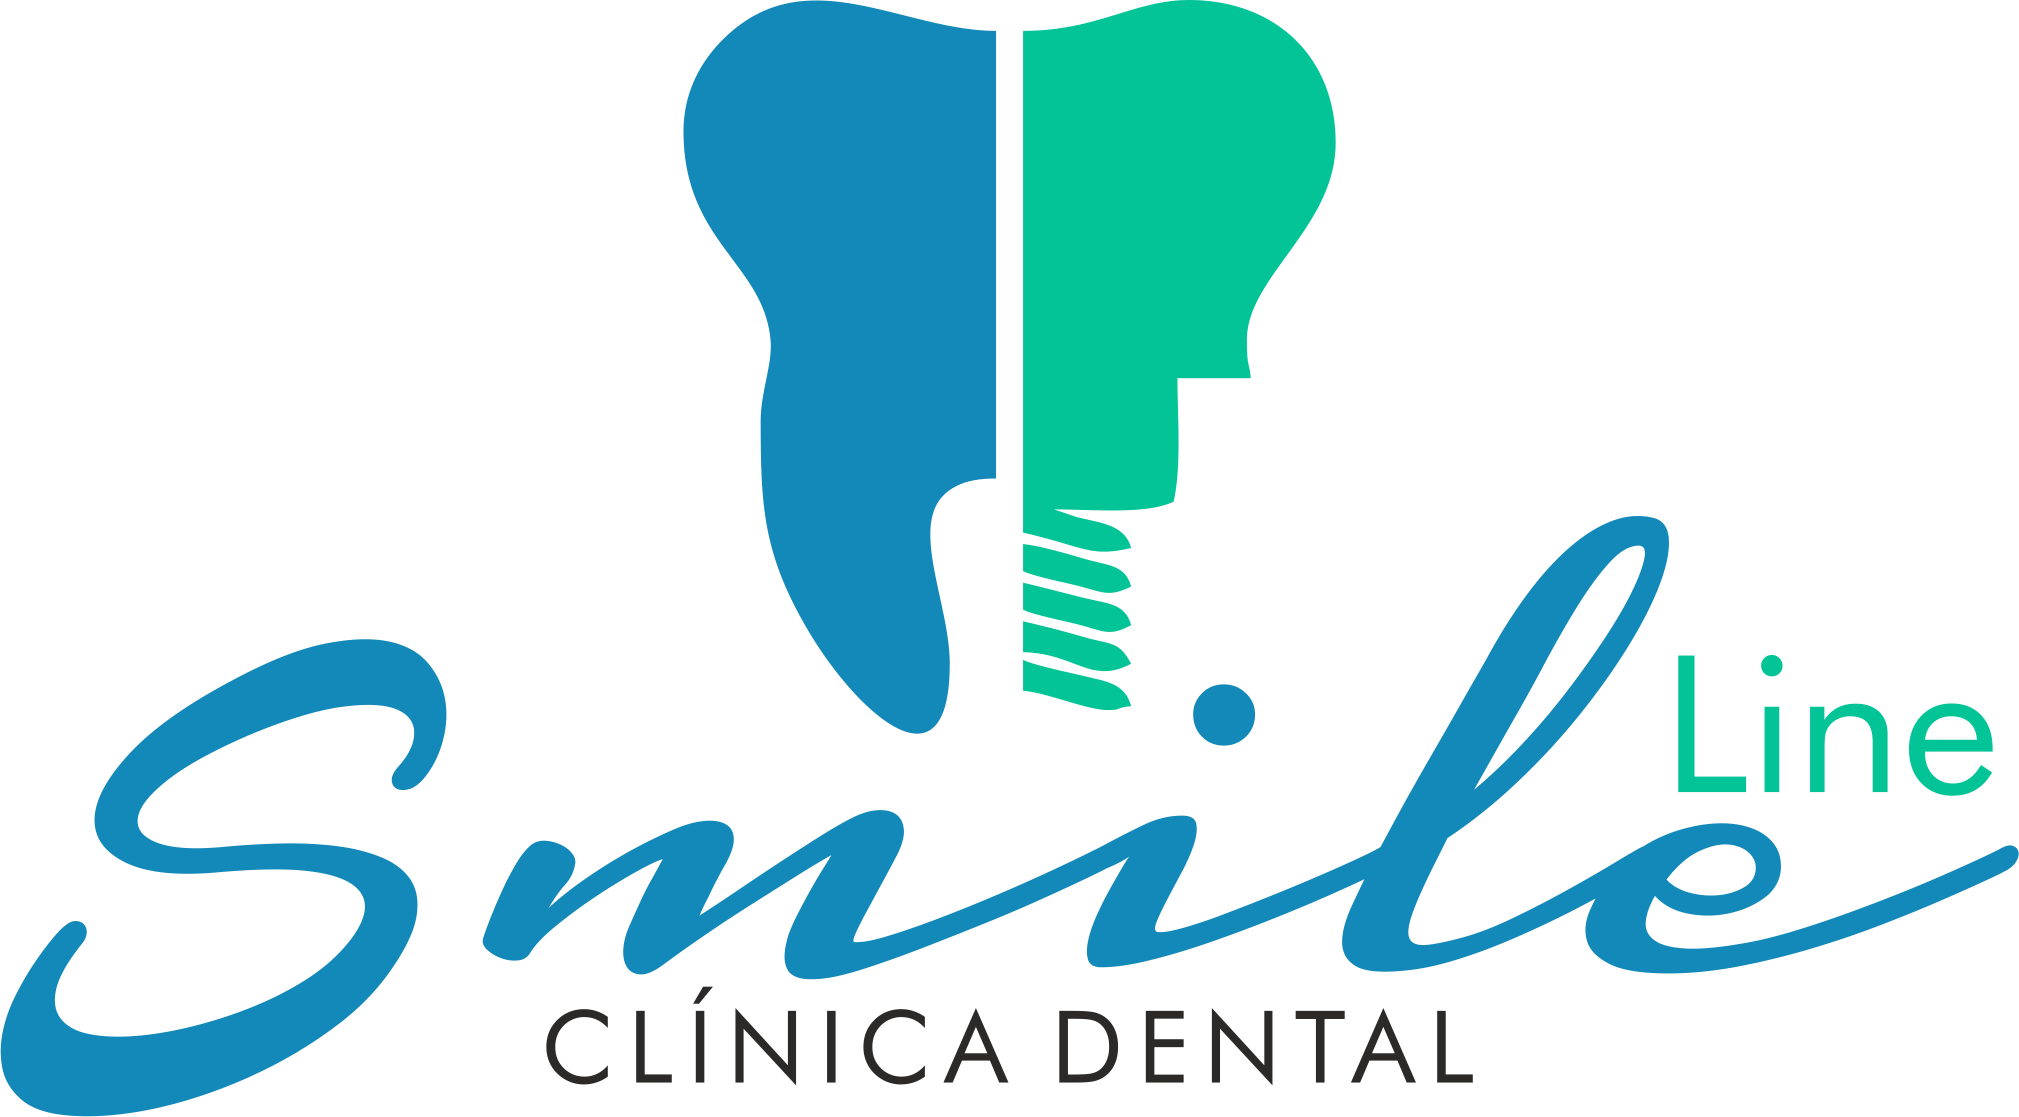 Clinica odontológica en Madrid